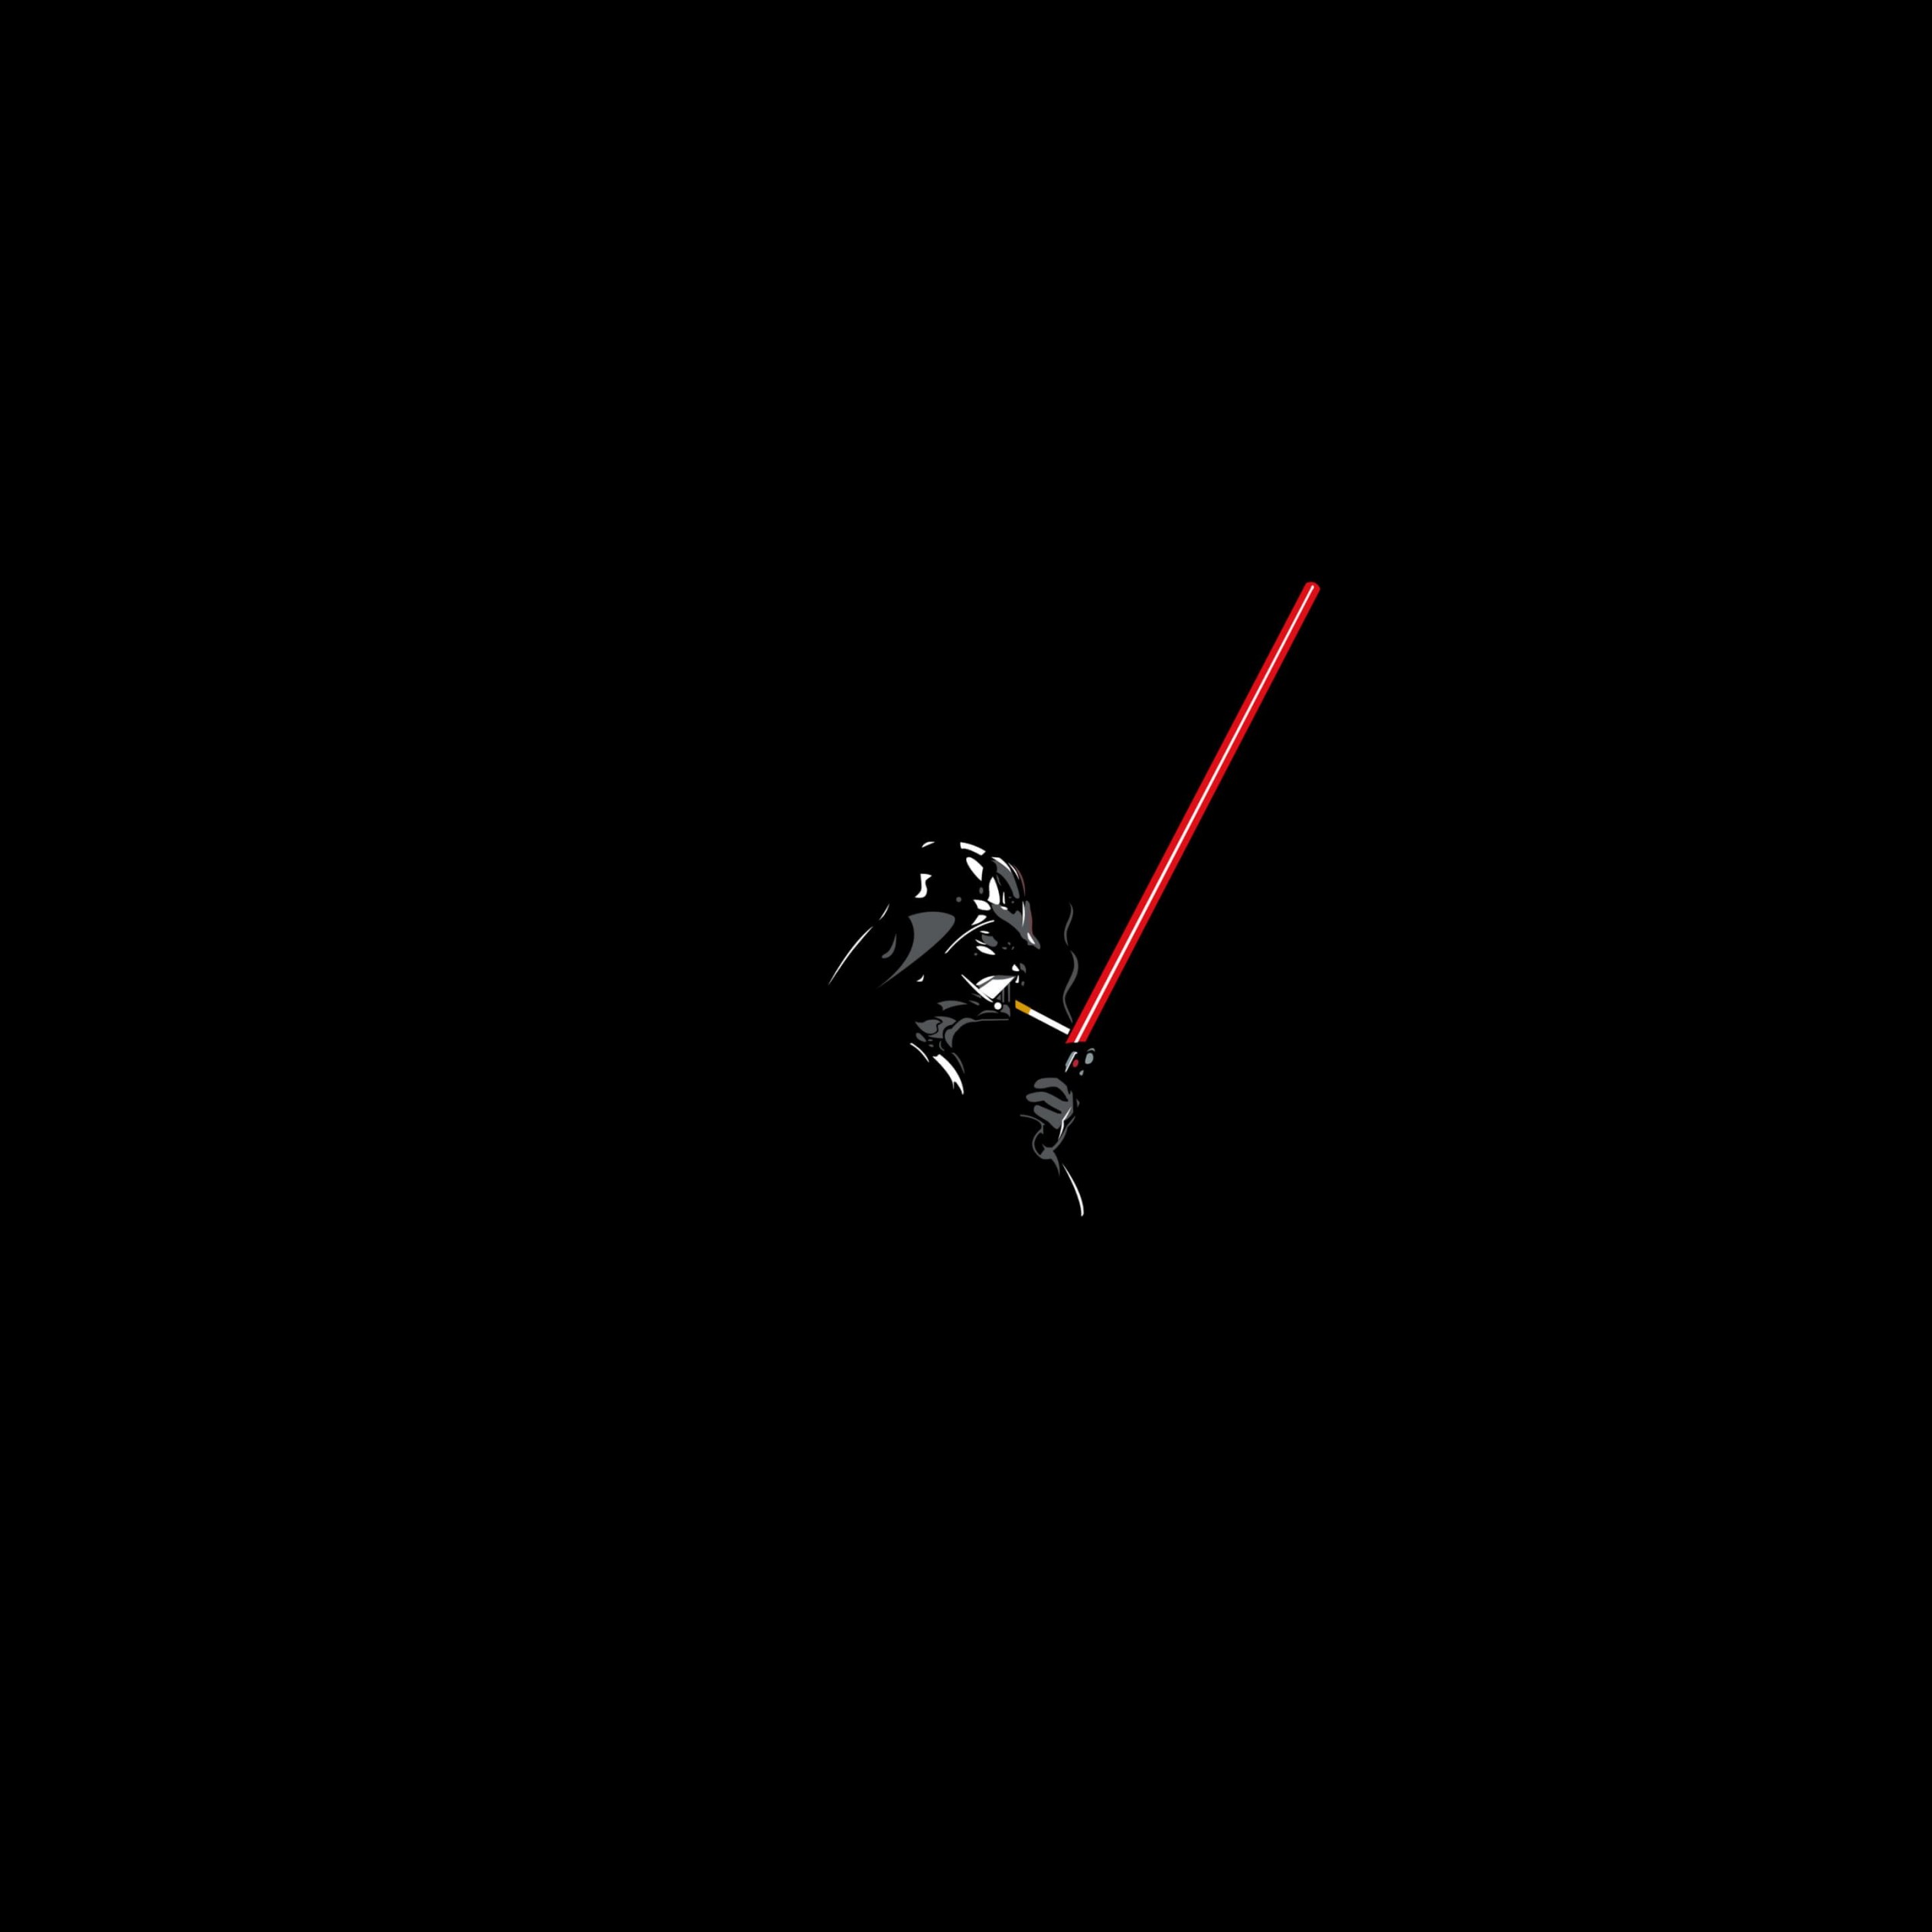 Darth Vader Lighting a Cigarette Wallpaper for Apple iPad mini 2